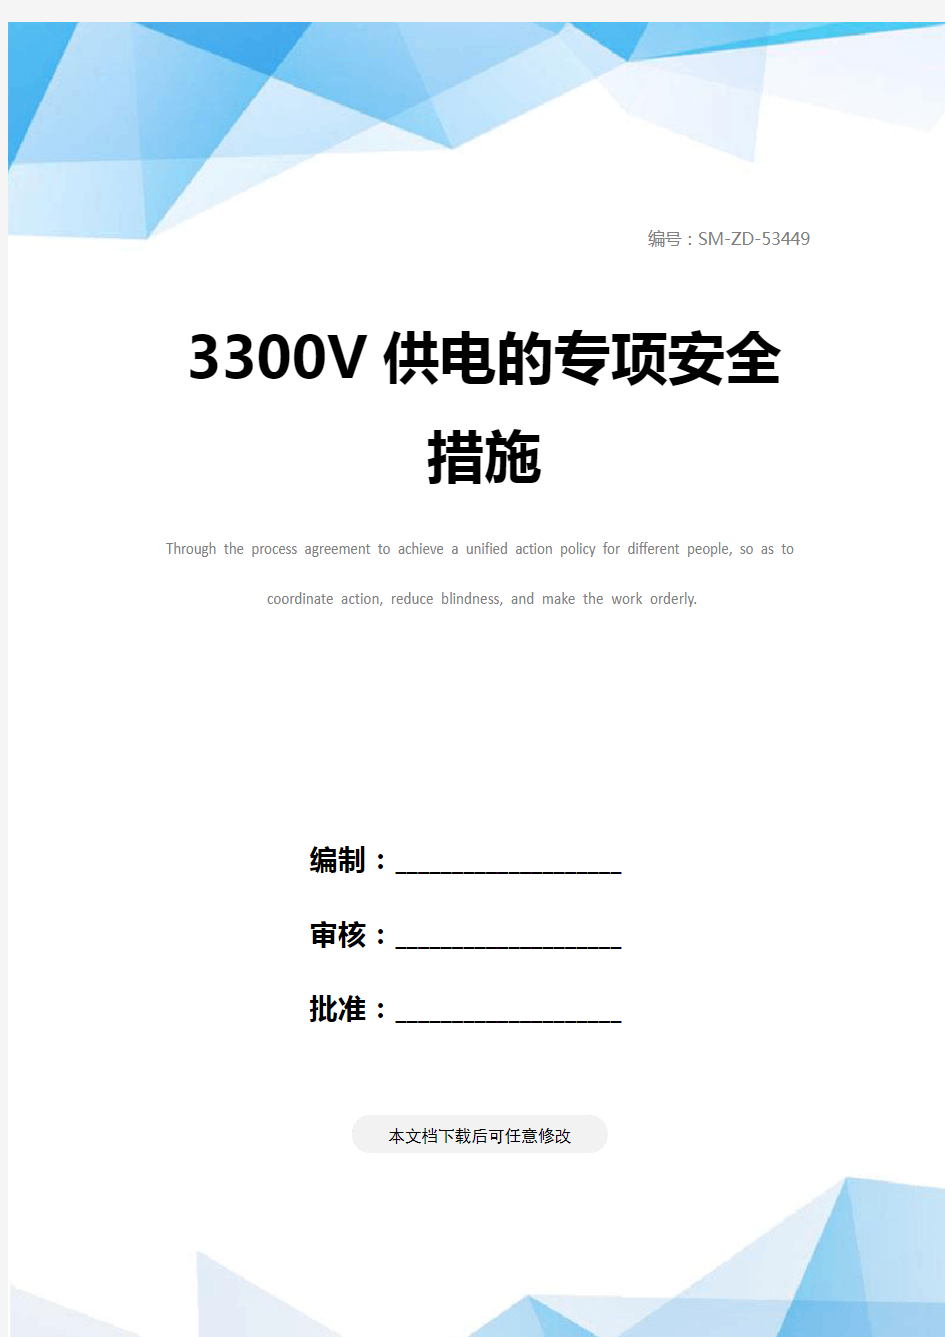 3300V供电的专项安全措施